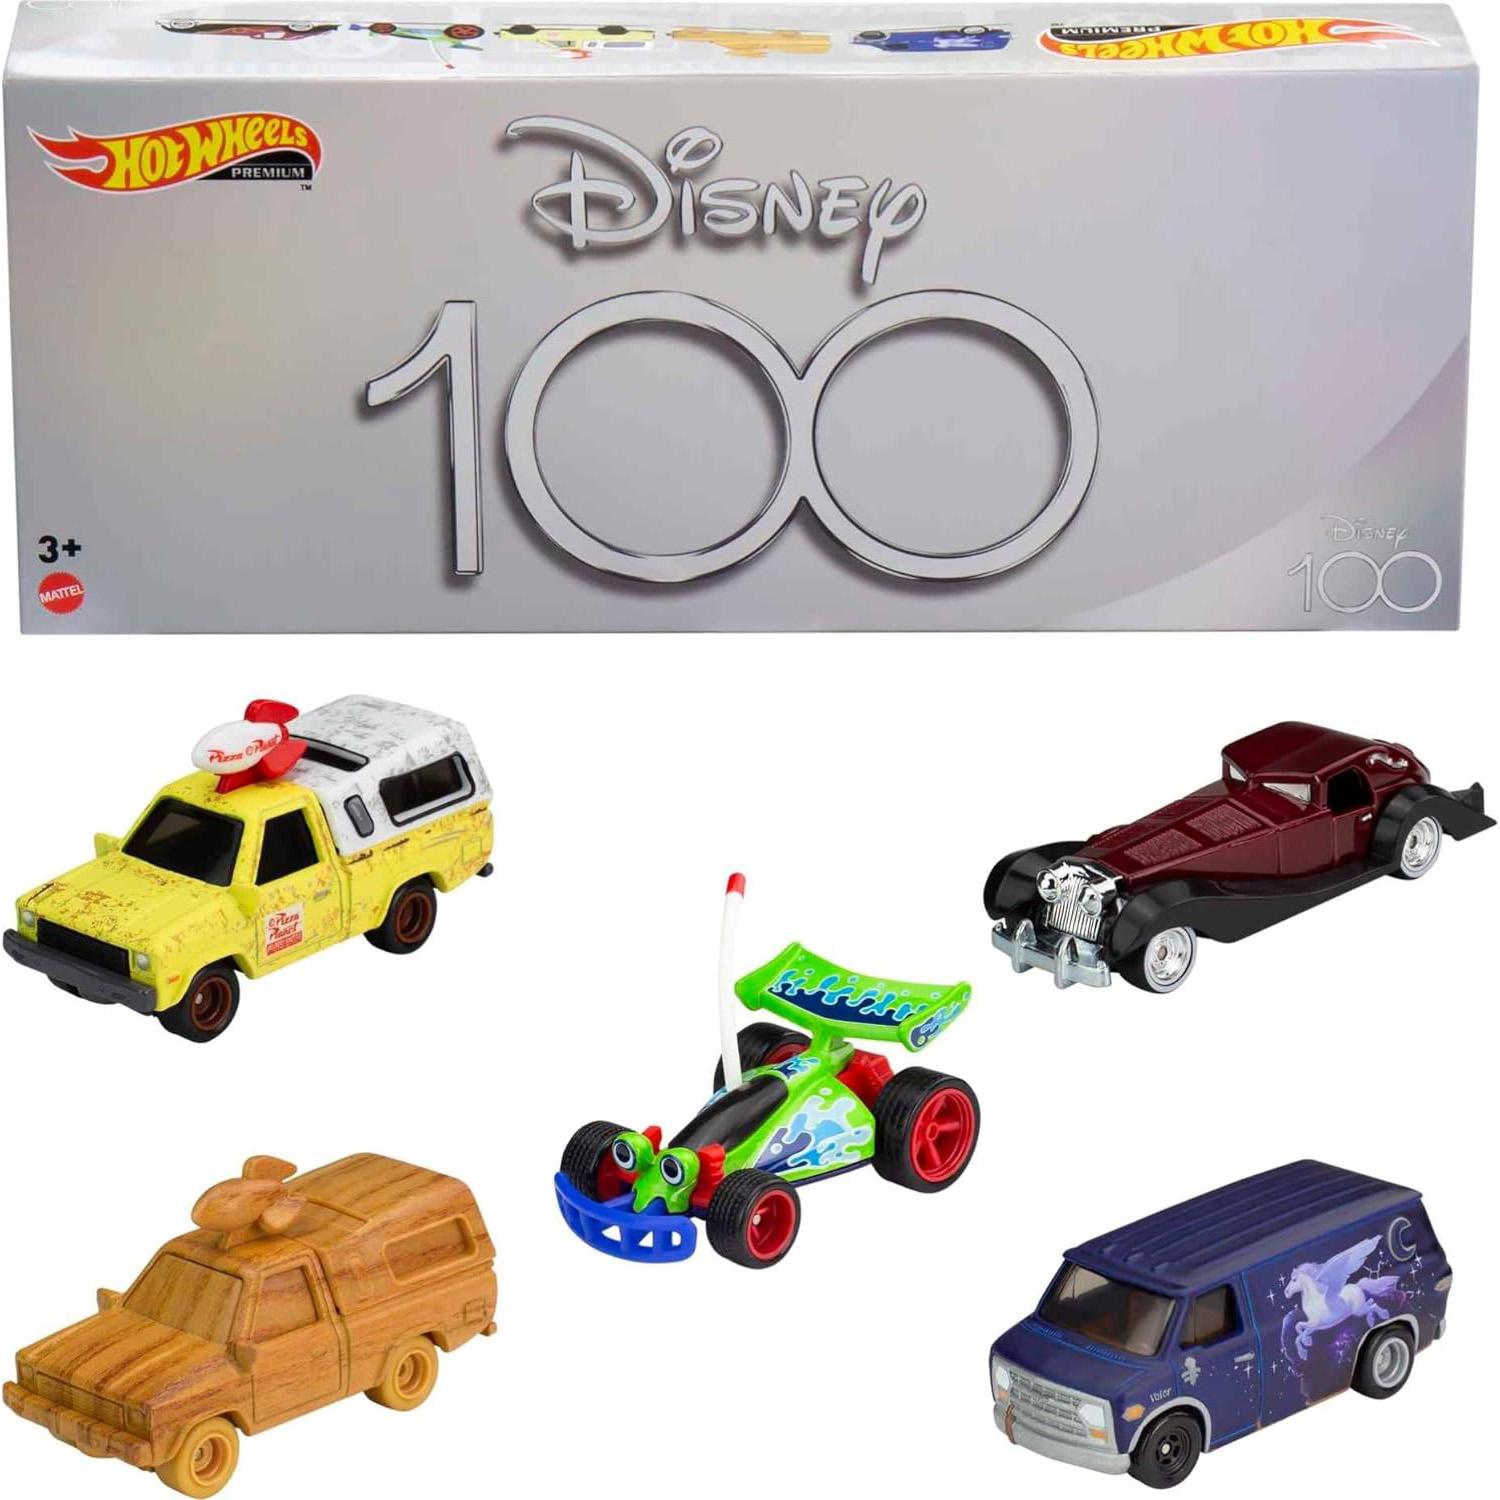 Hot Wheels Premium Disney 100 Bundle for $14.99